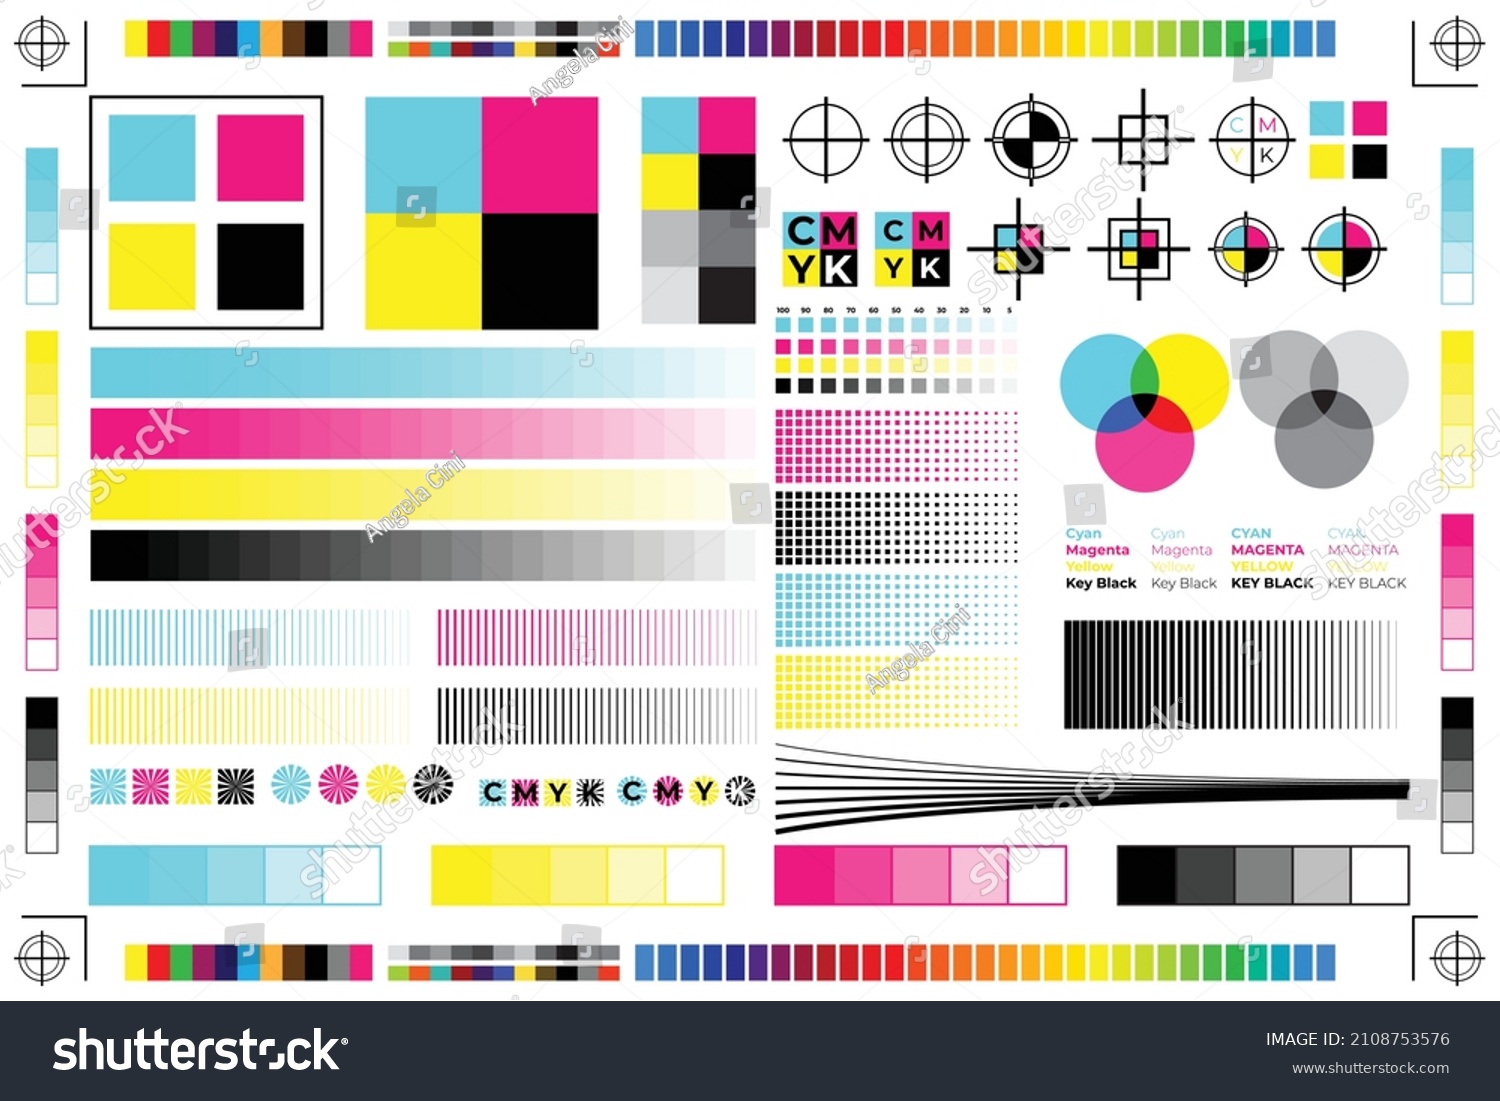 SVG of CMYK Print Calibration Illustration with Offset Printing Marks and Color Test svg